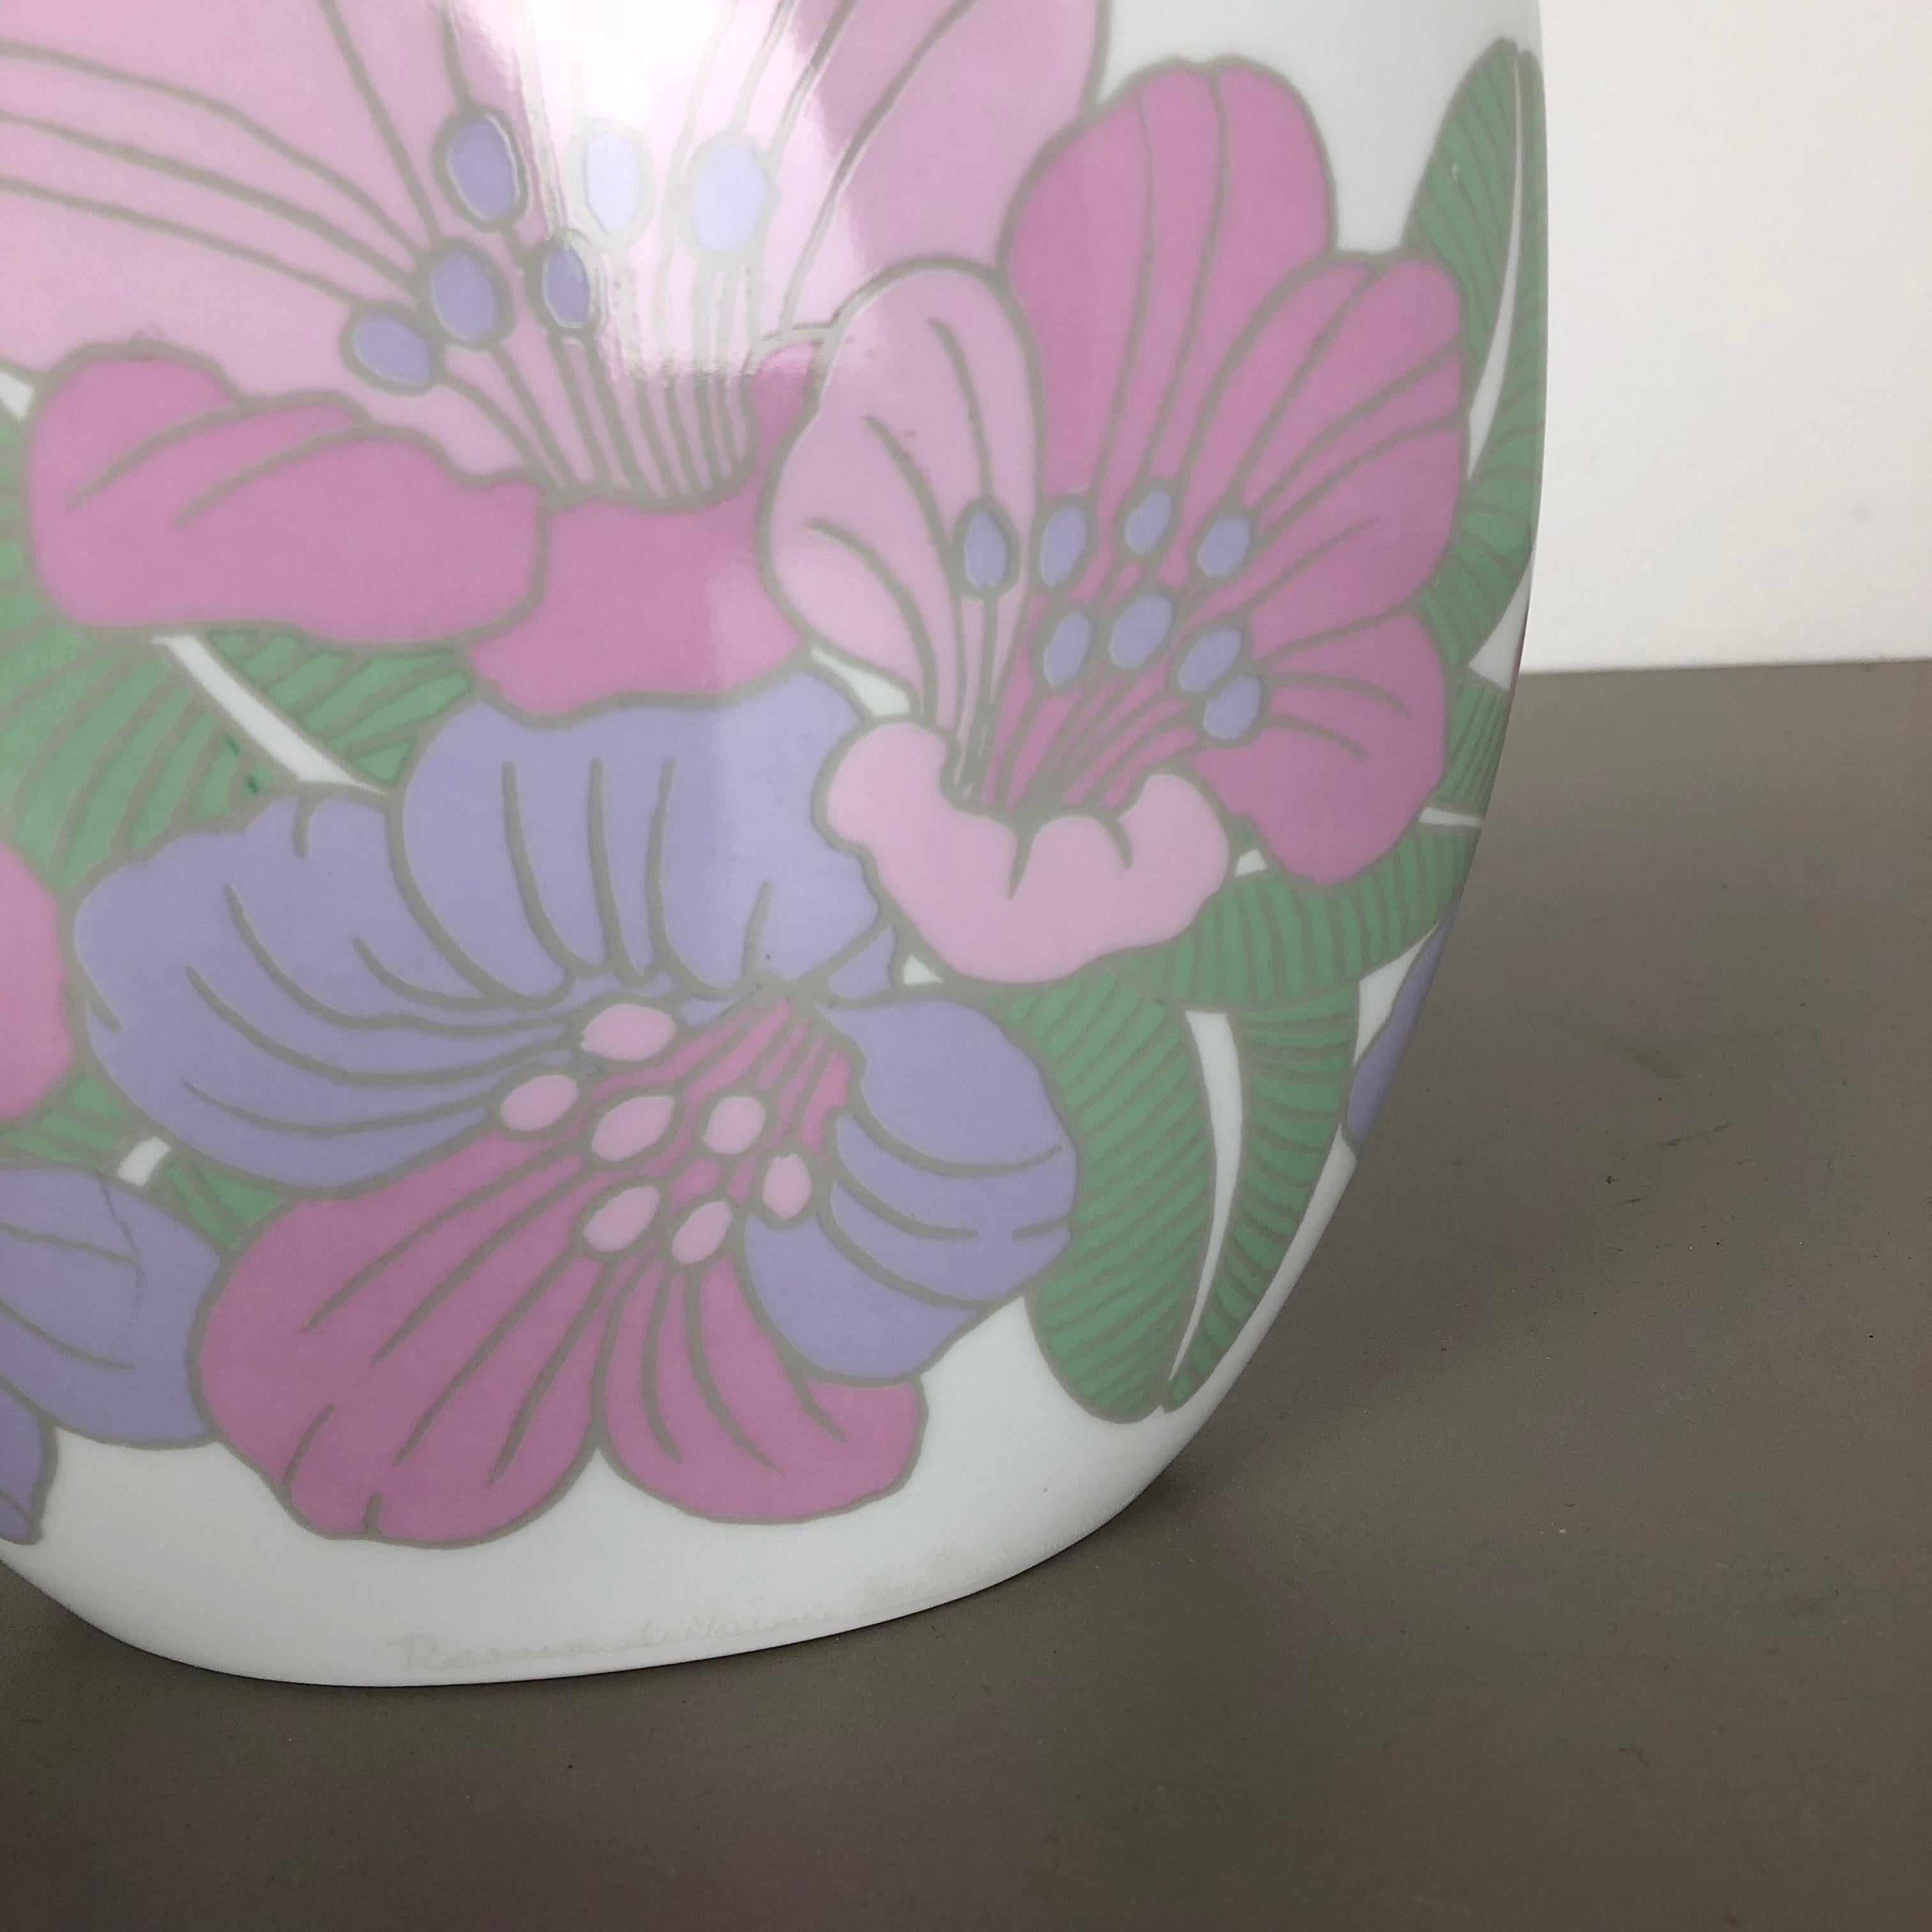 20th Century Colorful 1970s Art Vase Porcelain Vase Rosemonde Nairac for Rosenthal Germany For Sale